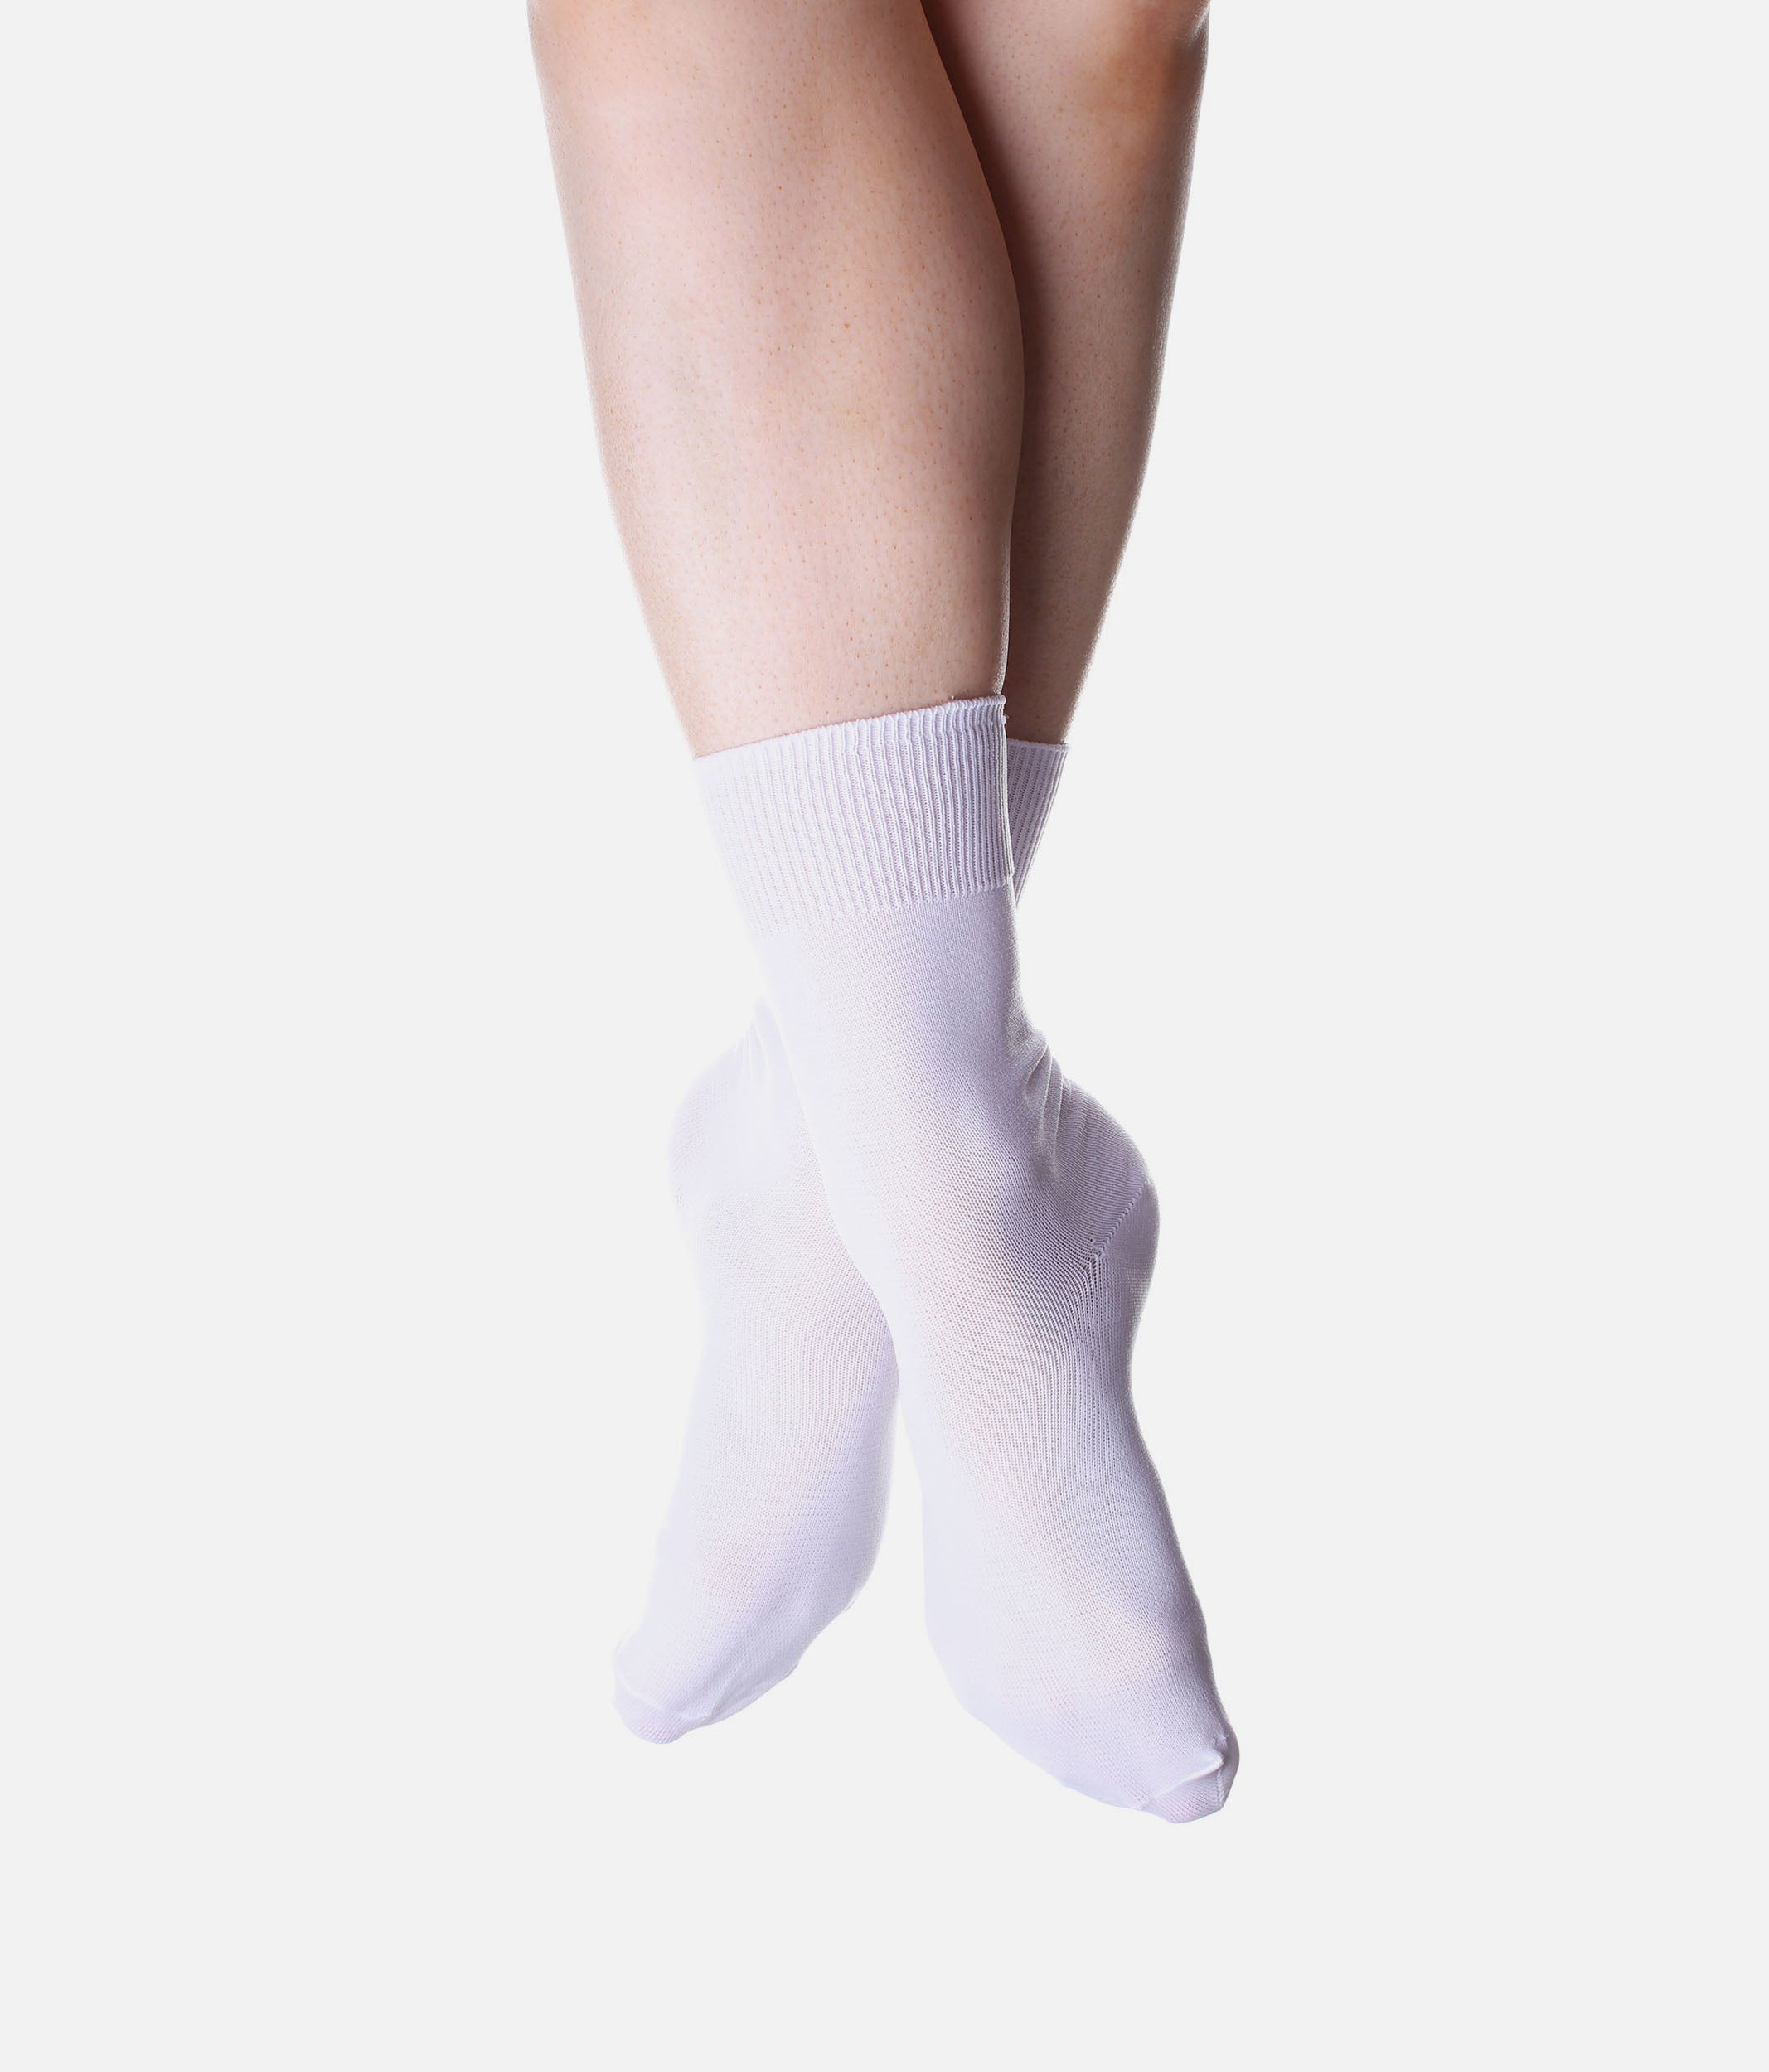 Irish Ankle Poodle Socks - Neverland Emporium